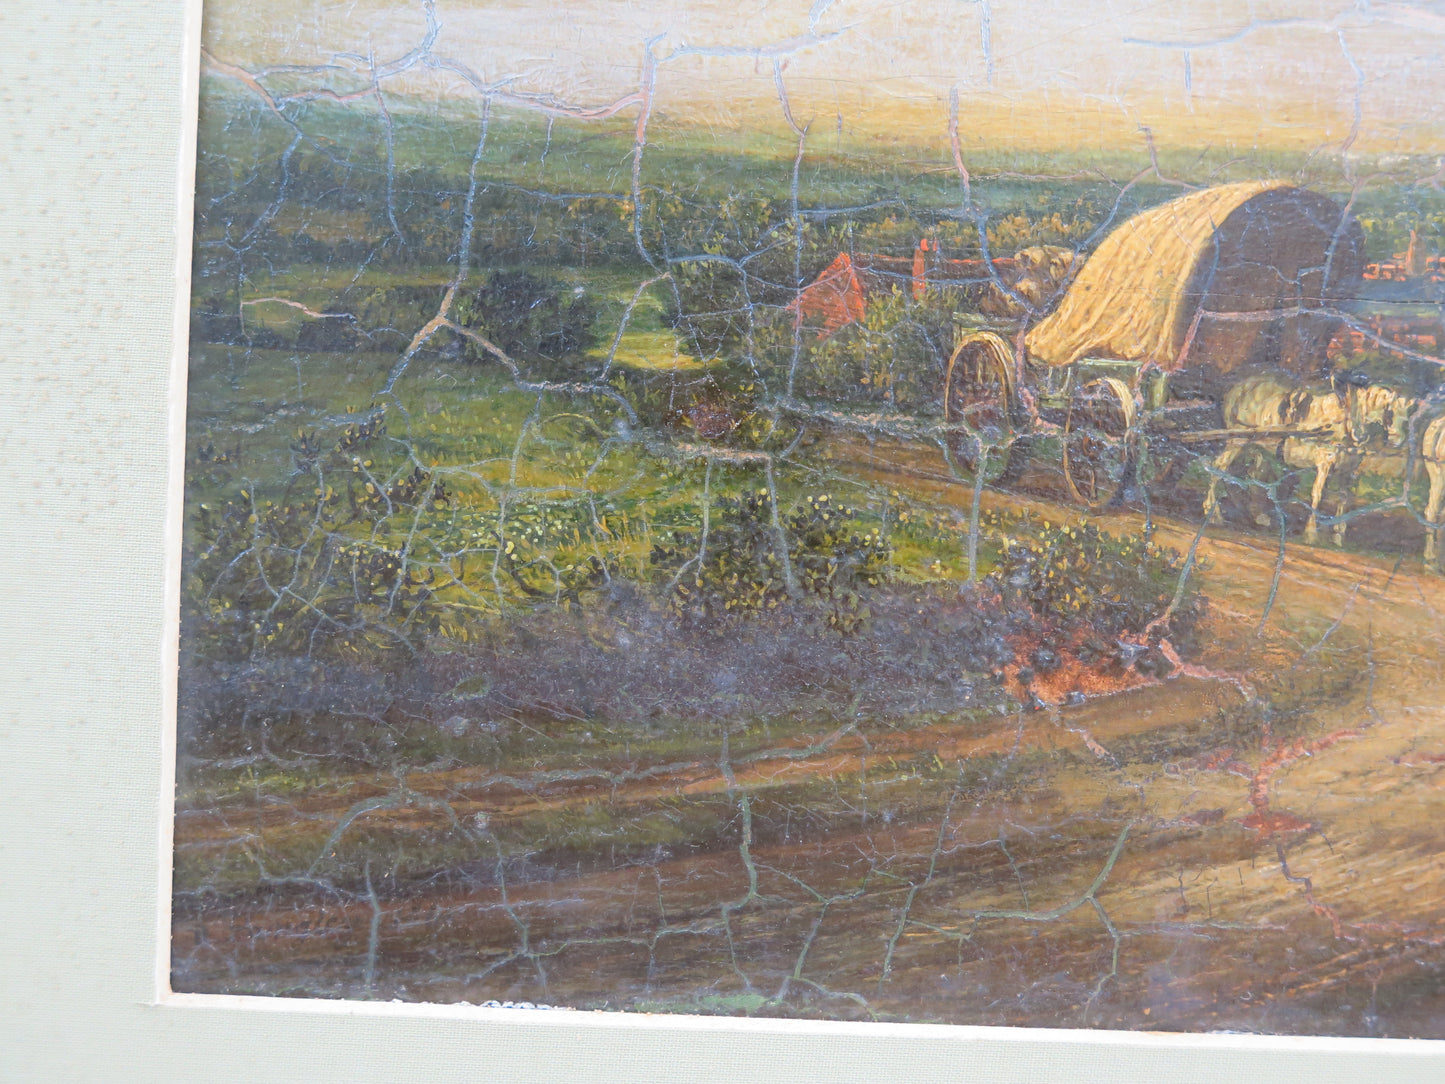 Vecchio quadro olio su tavola paesaggio nord America stati uniti cavalli bt4